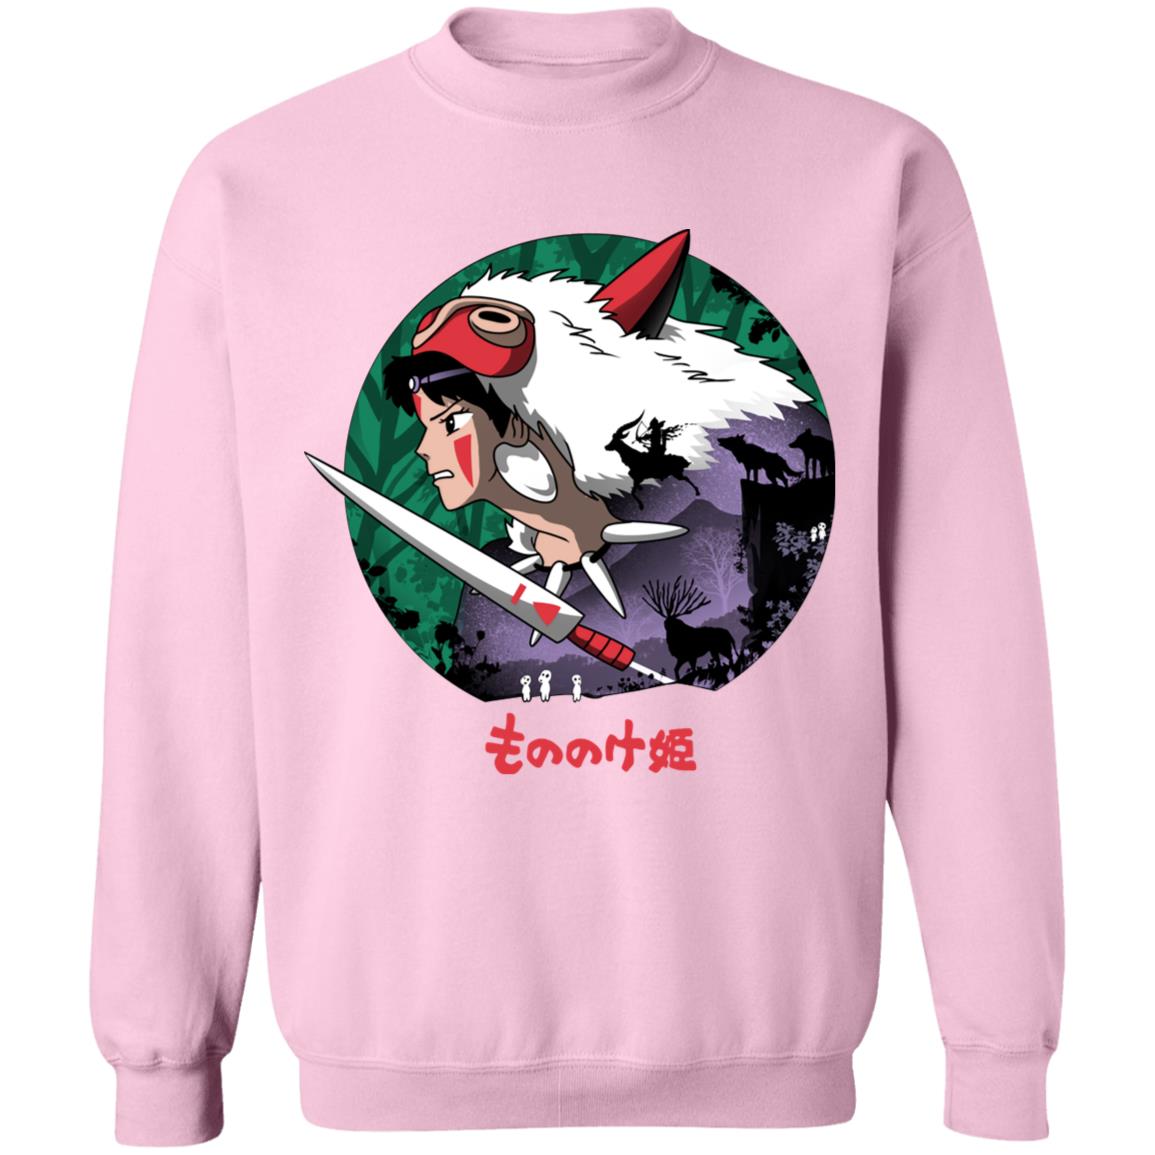 Princess Mononoke’s Journey Sweatshirt